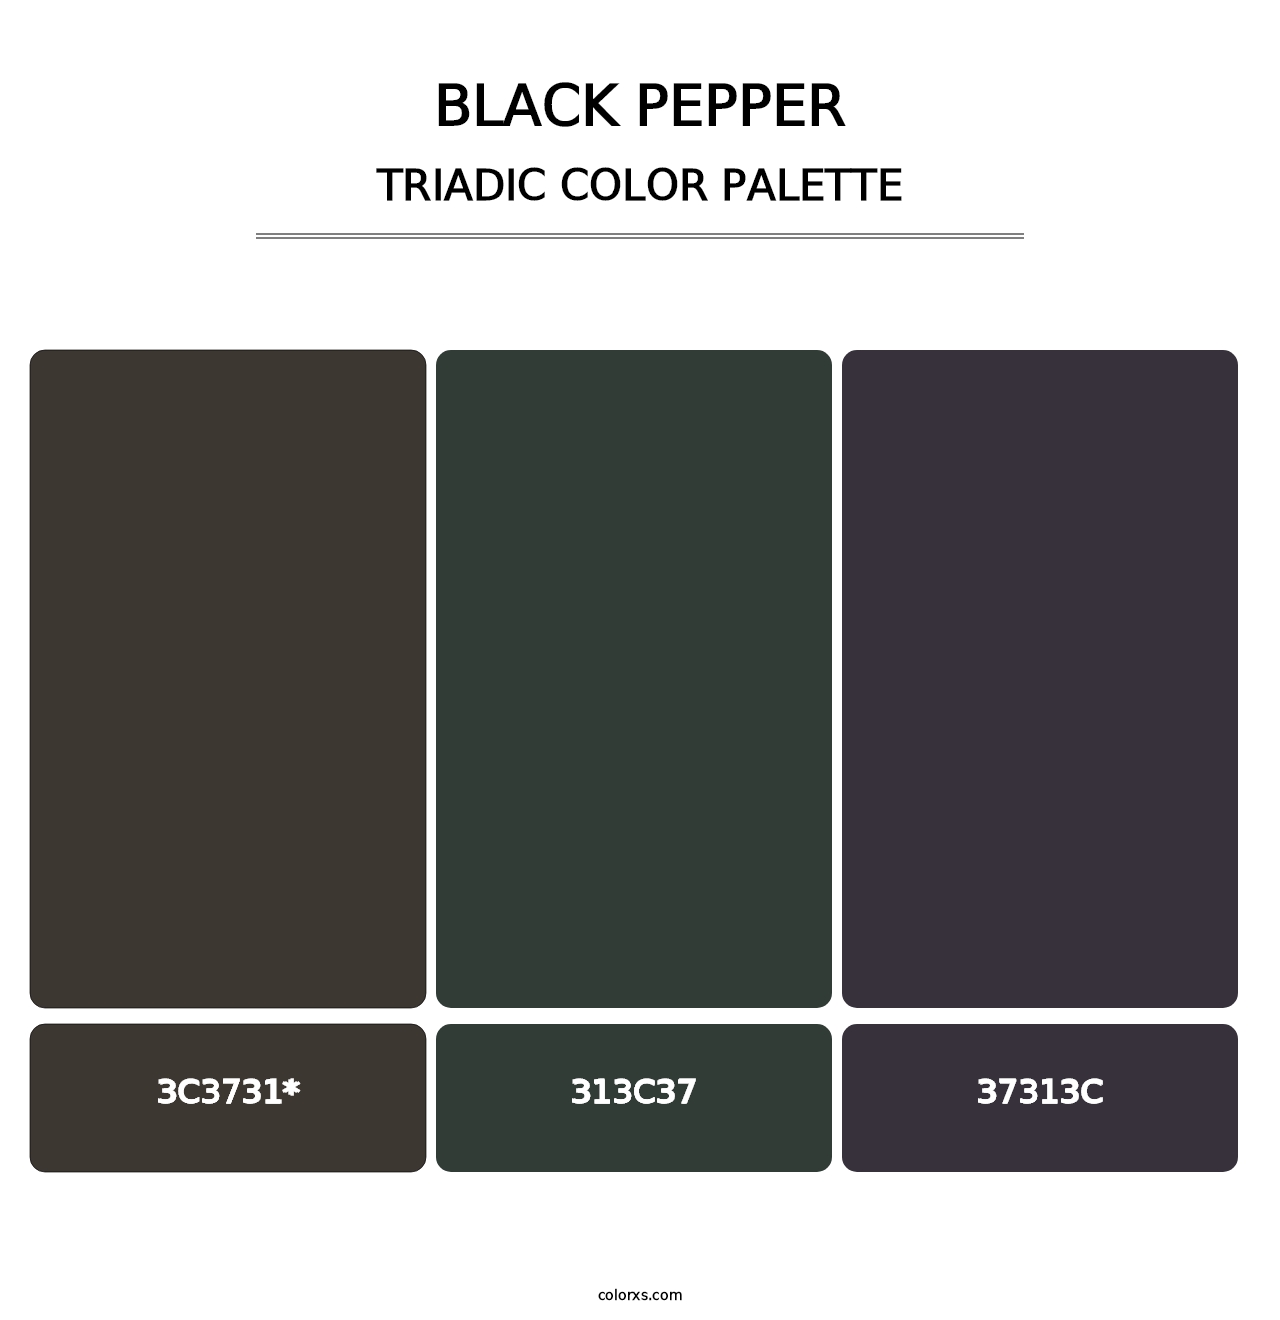 Black Pepper - Triadic Color Palette